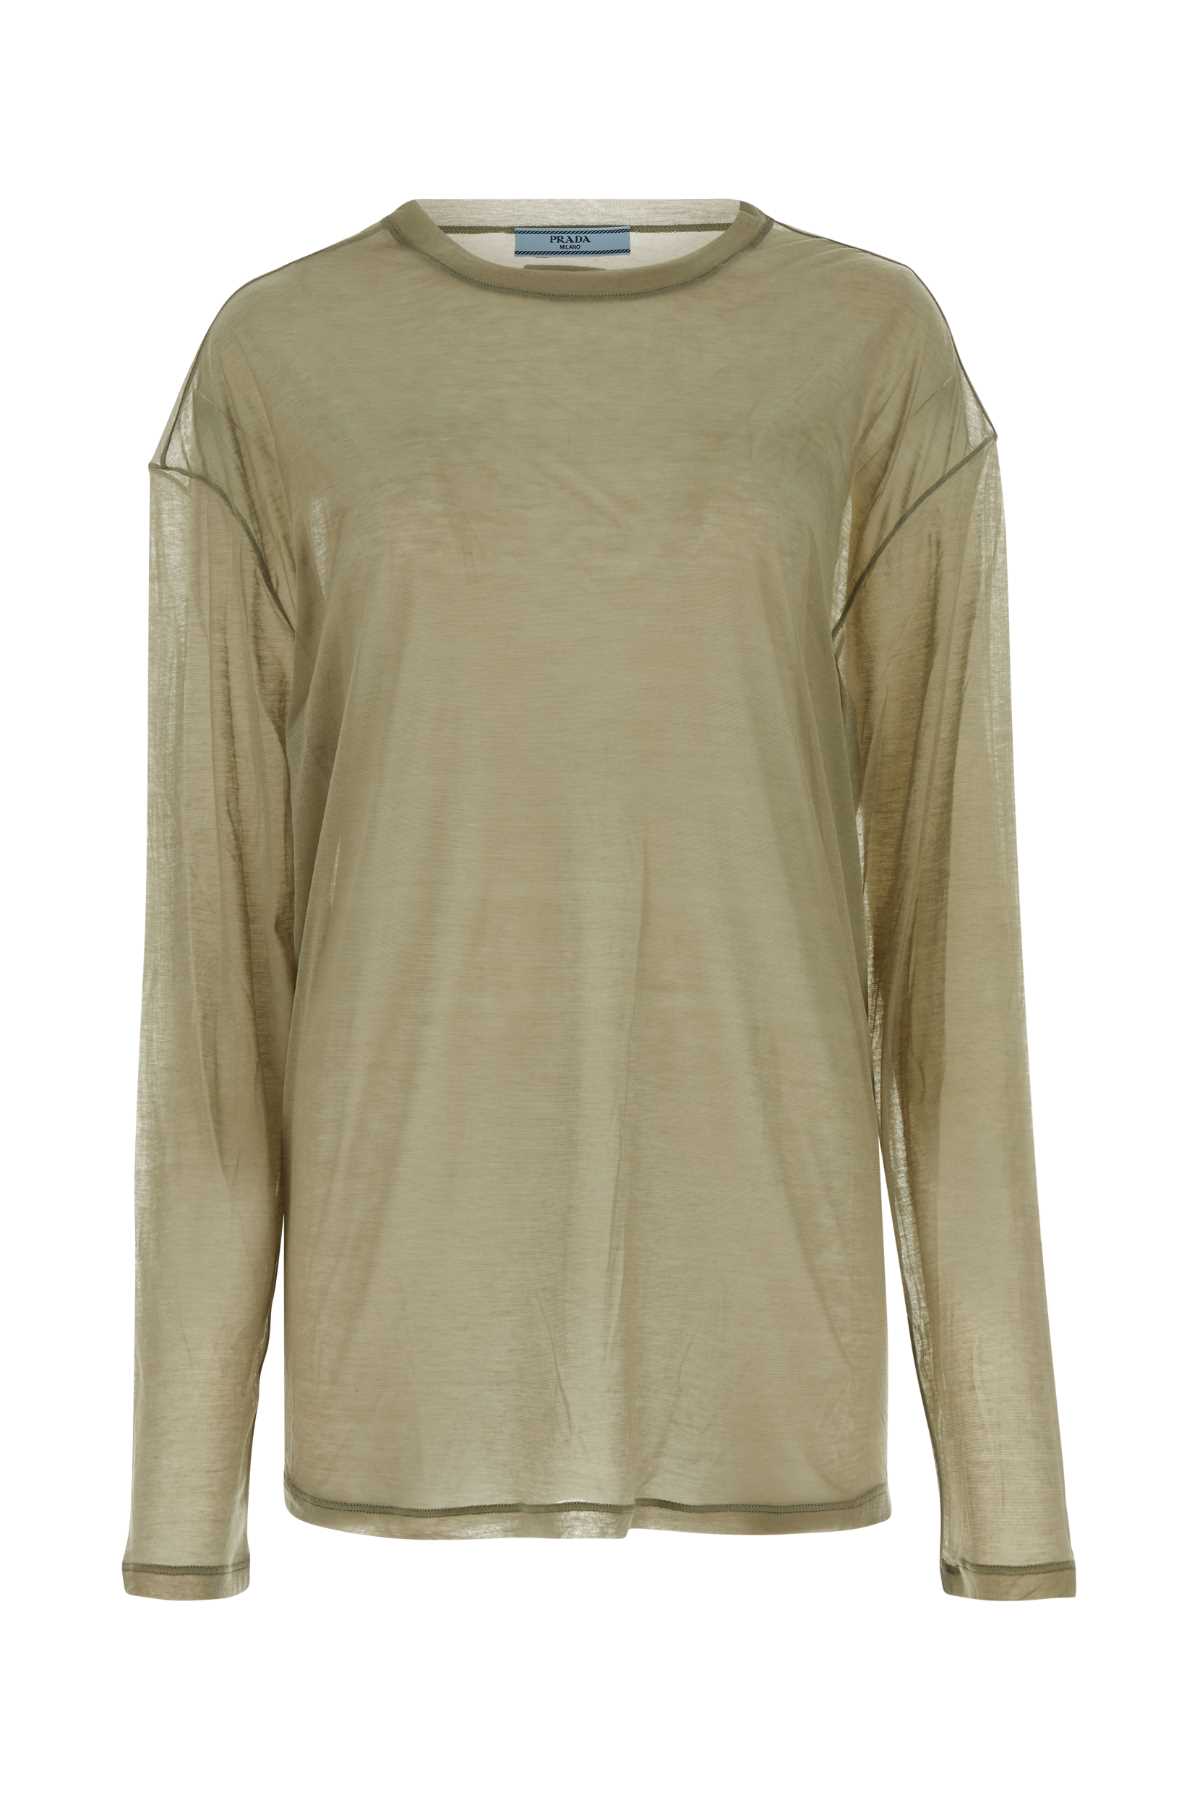 Prada Khaki Lyocell Blend Oversize T-shirt